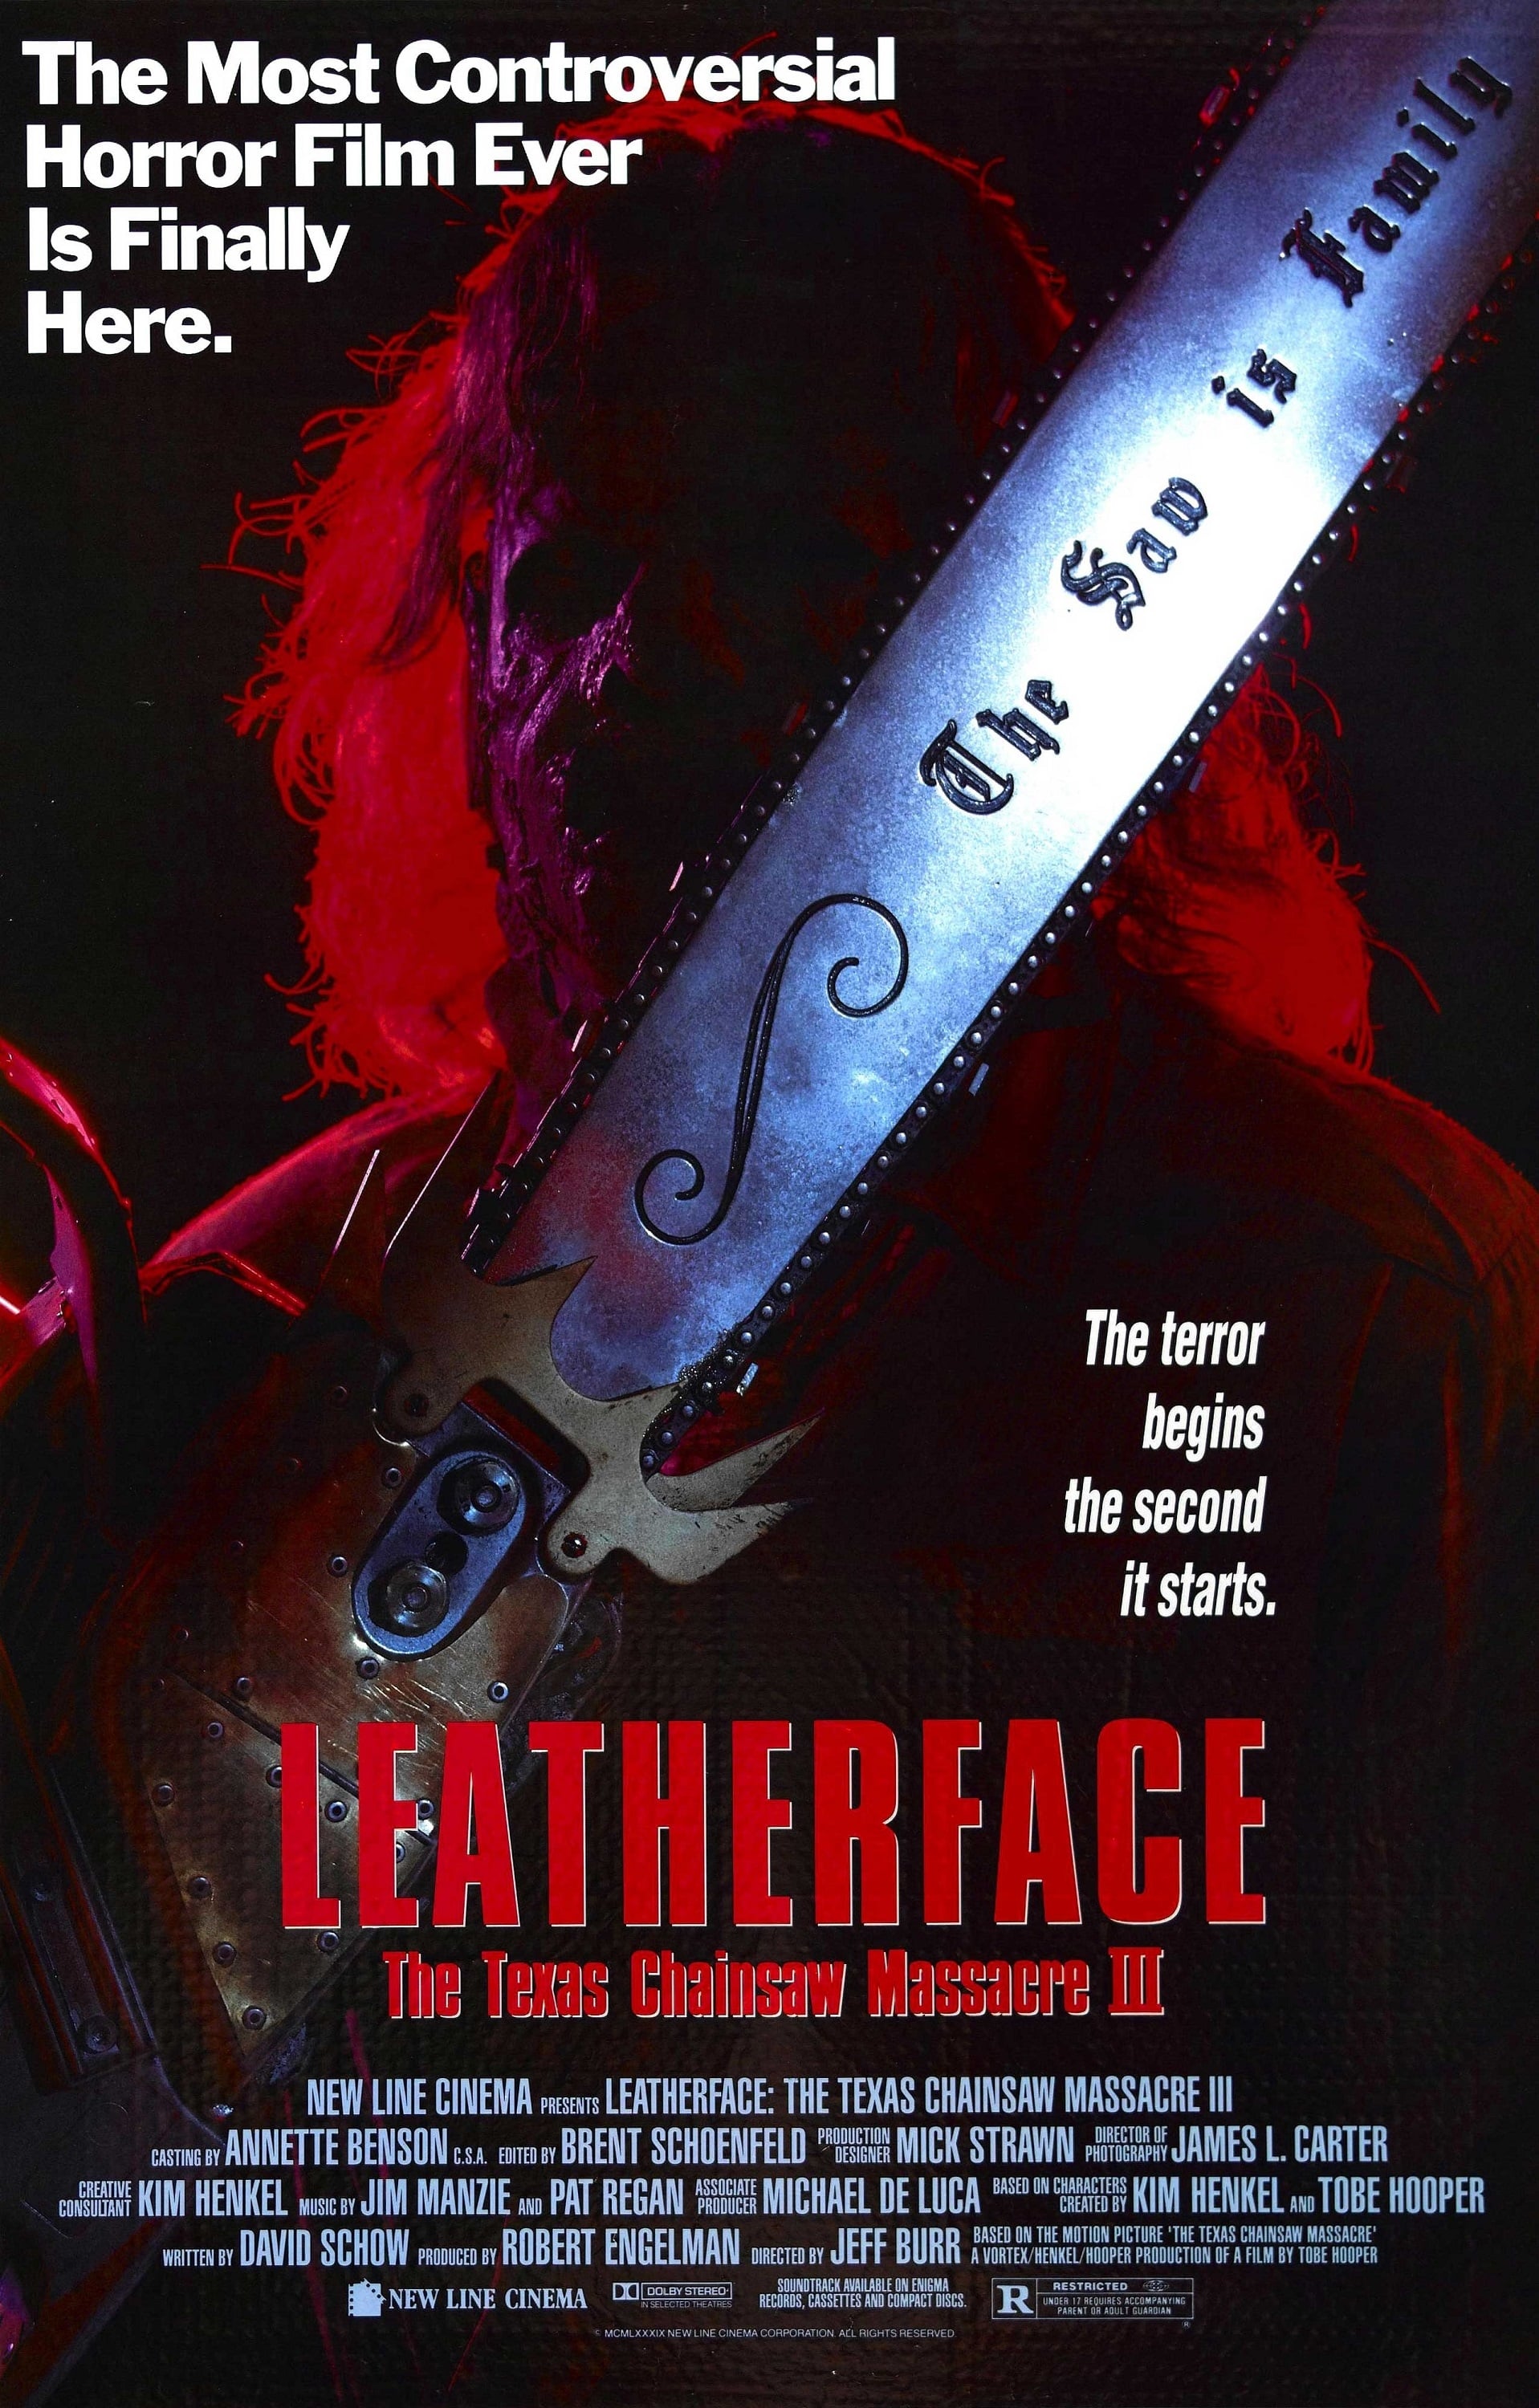 Plakat von "Leatherface: The Texas Chainsaw Massacre III"